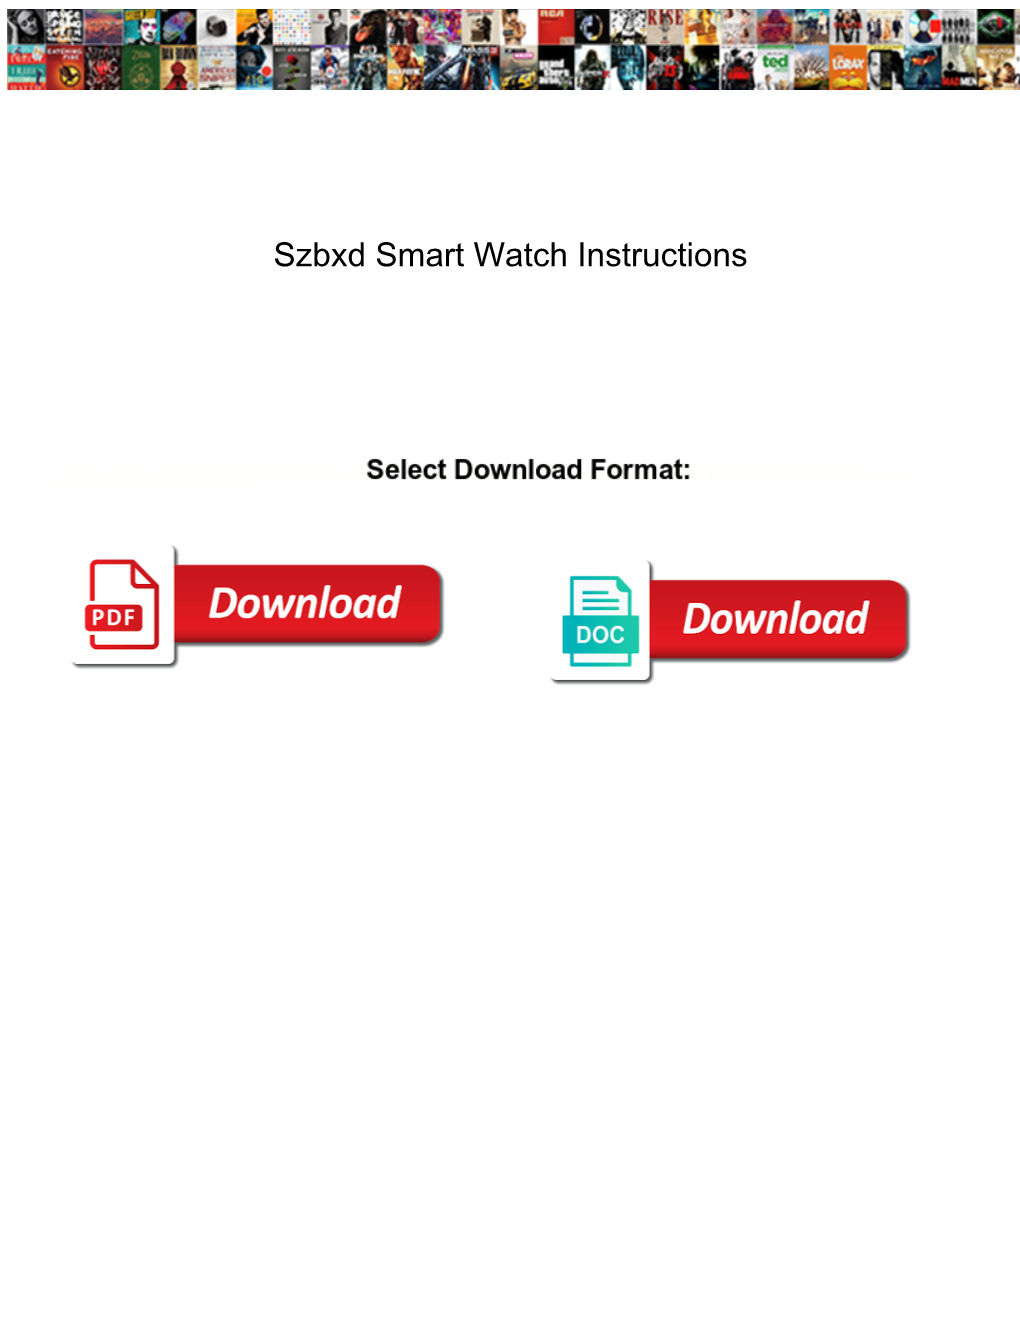 Szbxd Smart Watch Instructions